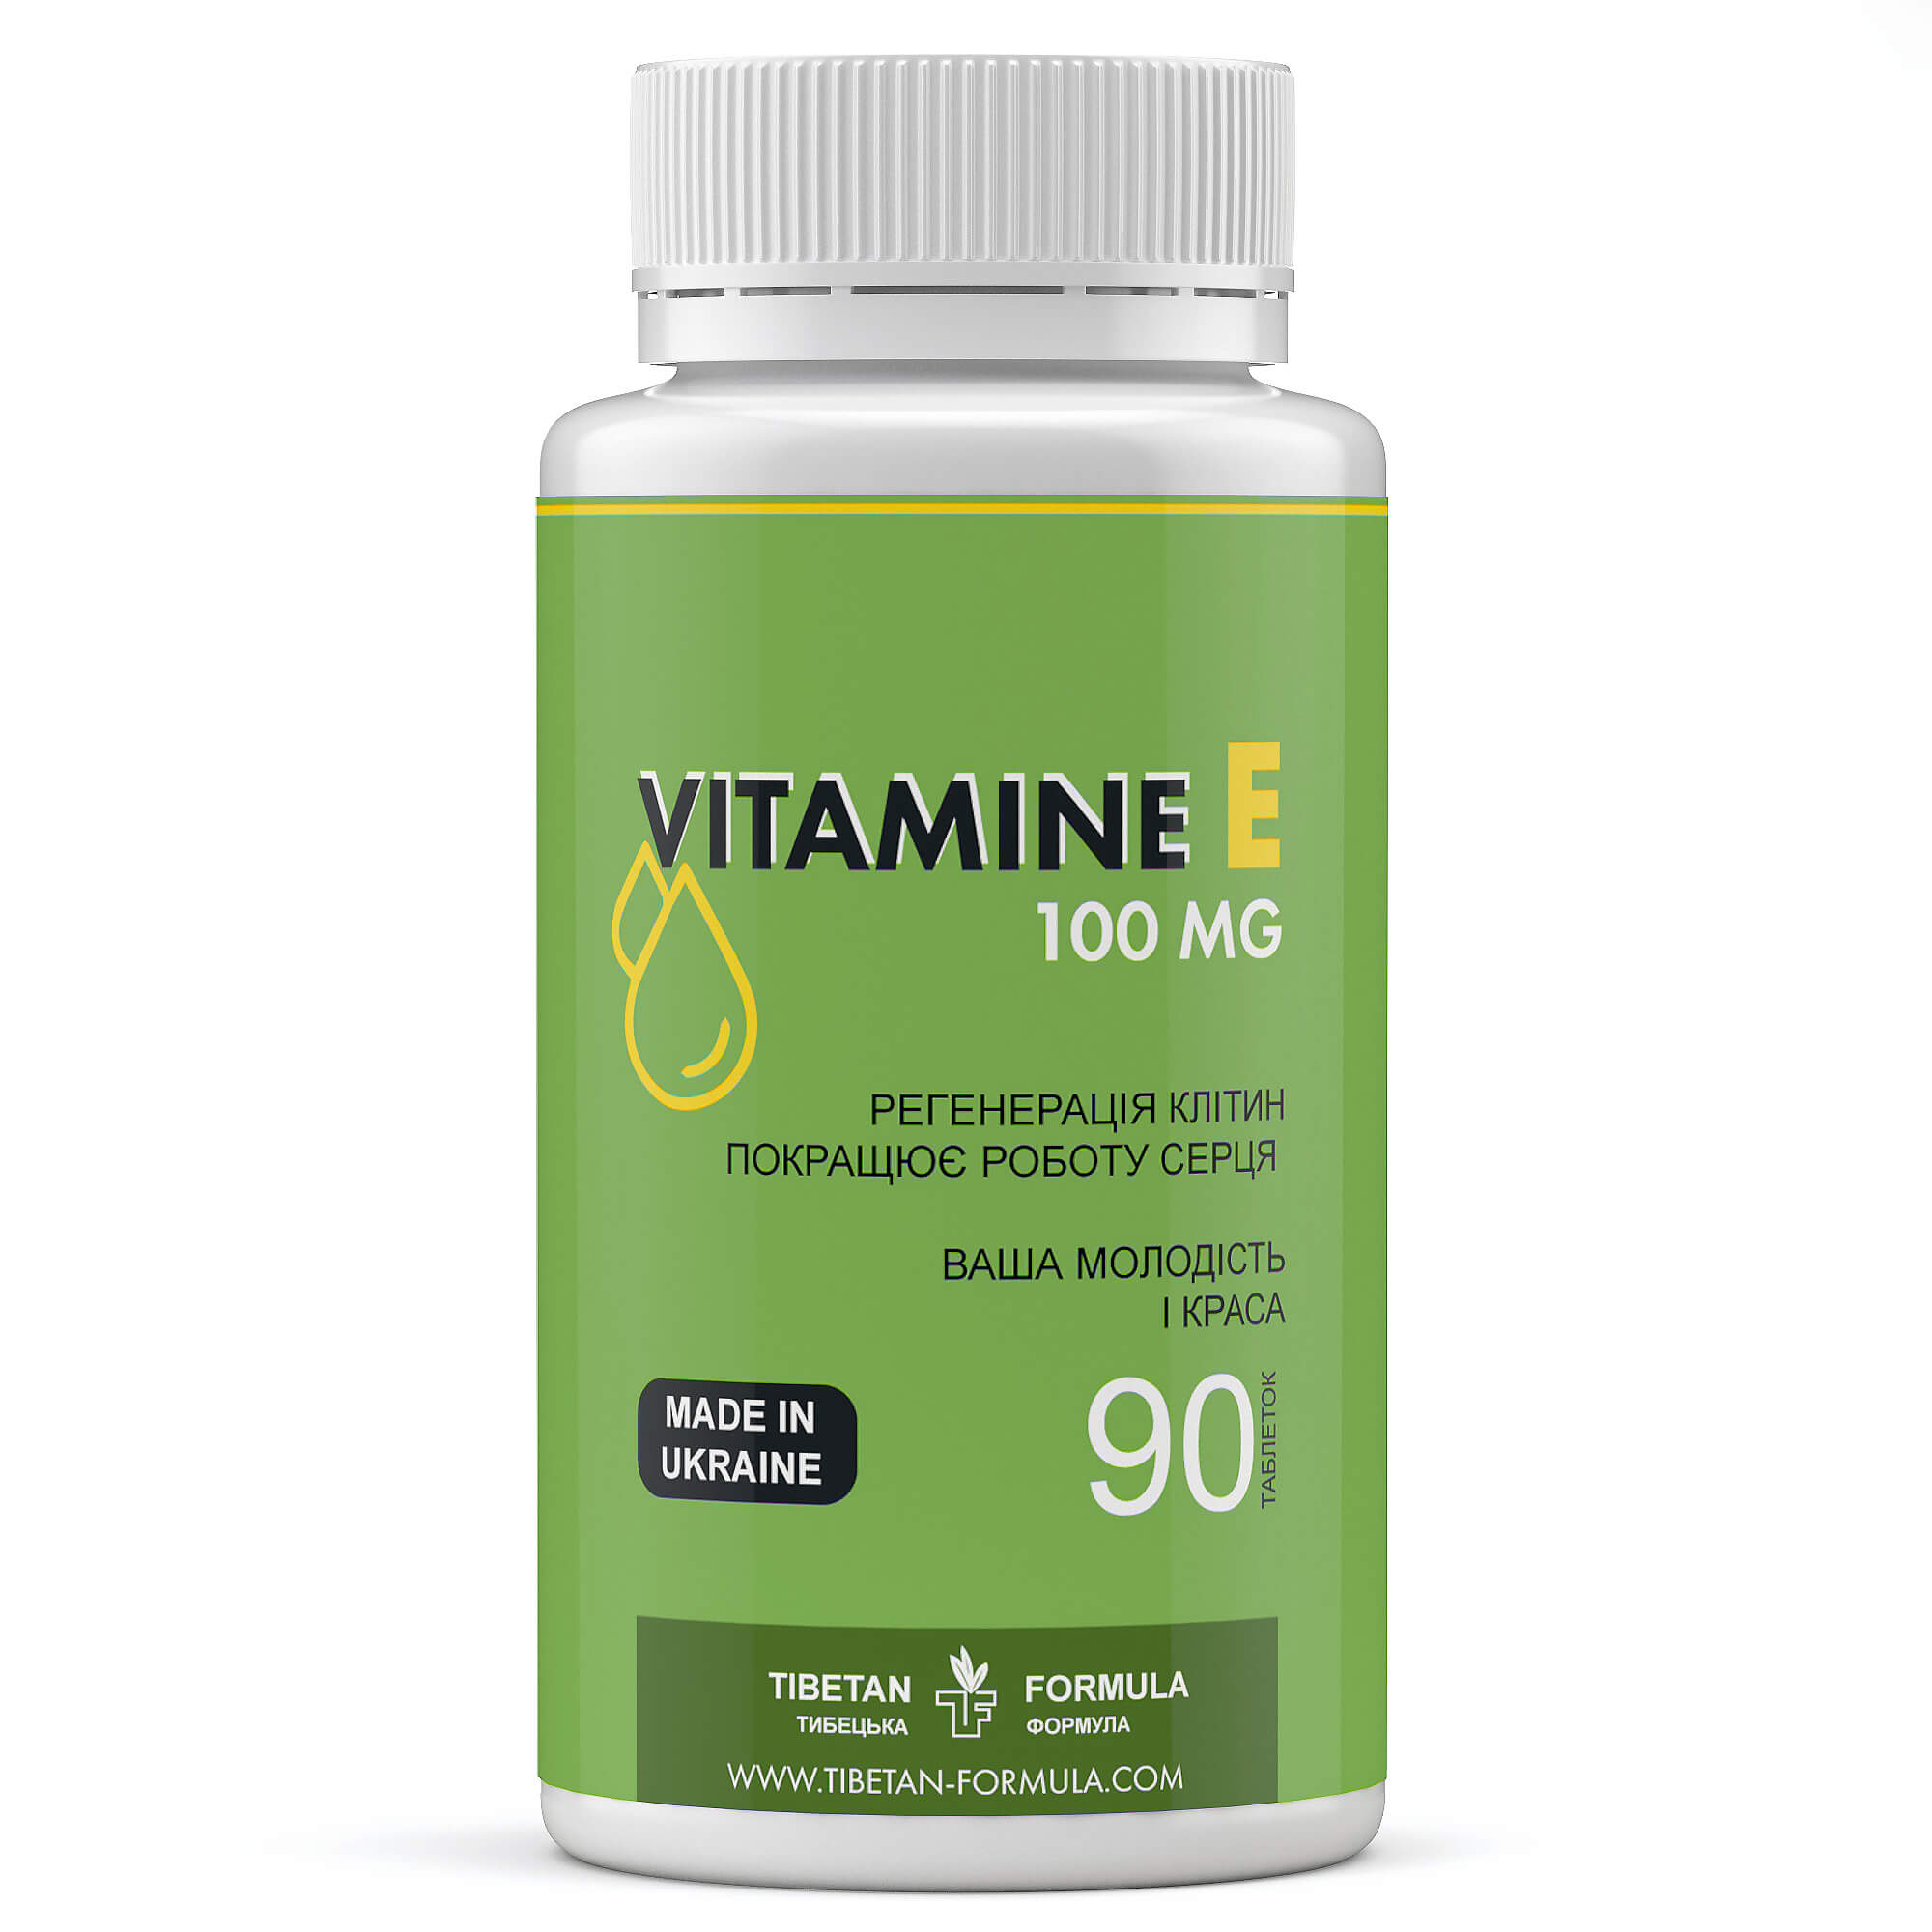 Витамин е после 60. Витамин е 100мг. Витамин е антиоксидант. Натуральный витамин е - Essential Vitamins. Витамин е для ногтей.